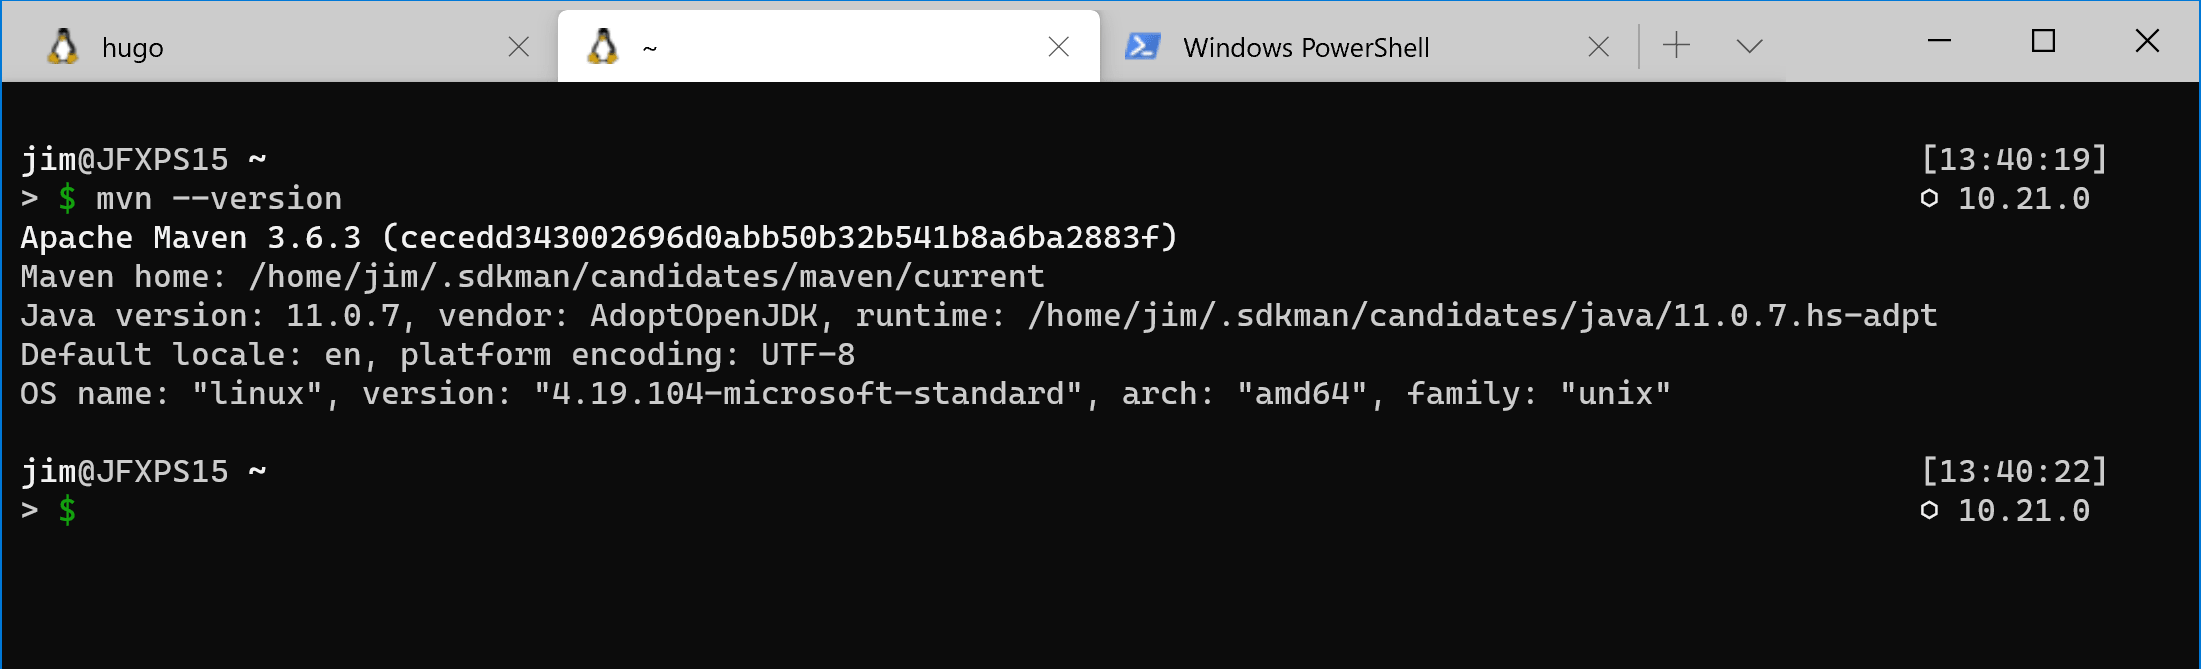 WSL windows terminal example of mvn –version